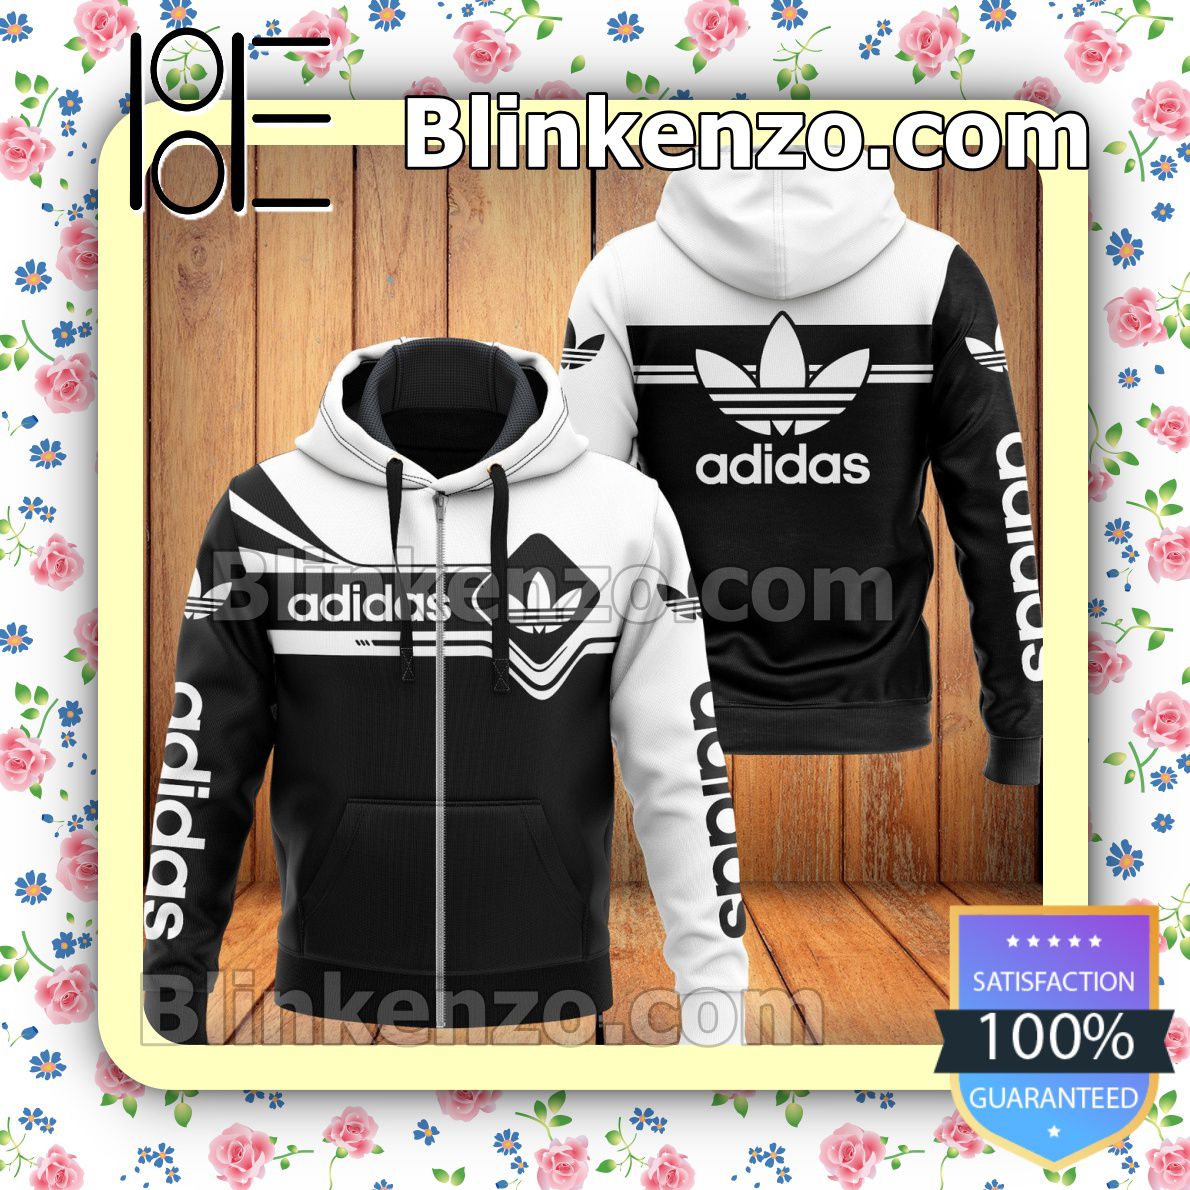 Buy In US Adidas Mix Black And White Full-Zip Hooded Fleece Sweatshirt